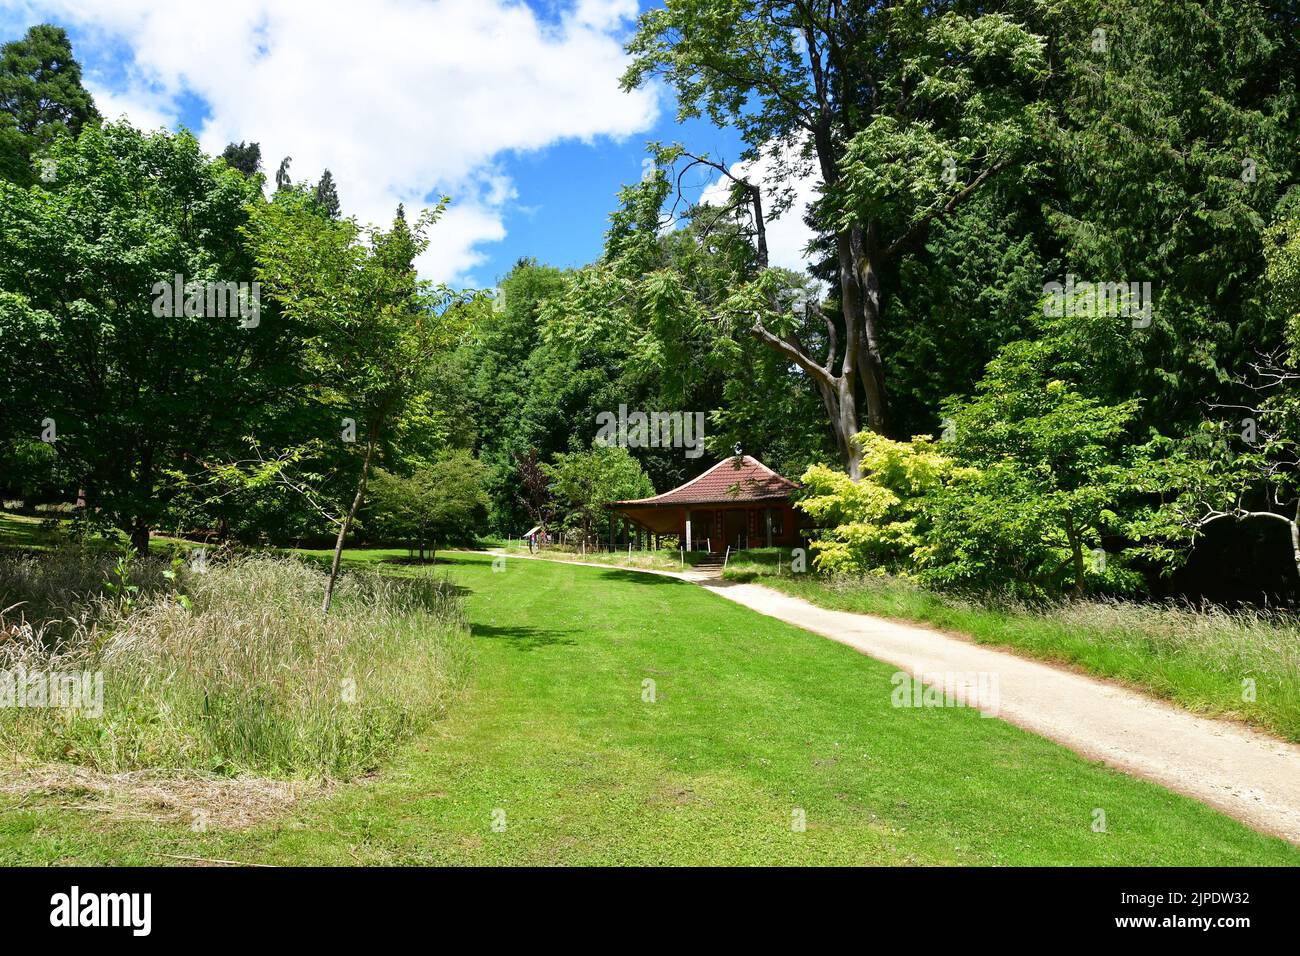 Batsford Arboretum, Moreton-in-Marsh, Cotswolds, Gloucestershire, UK Stock Photo